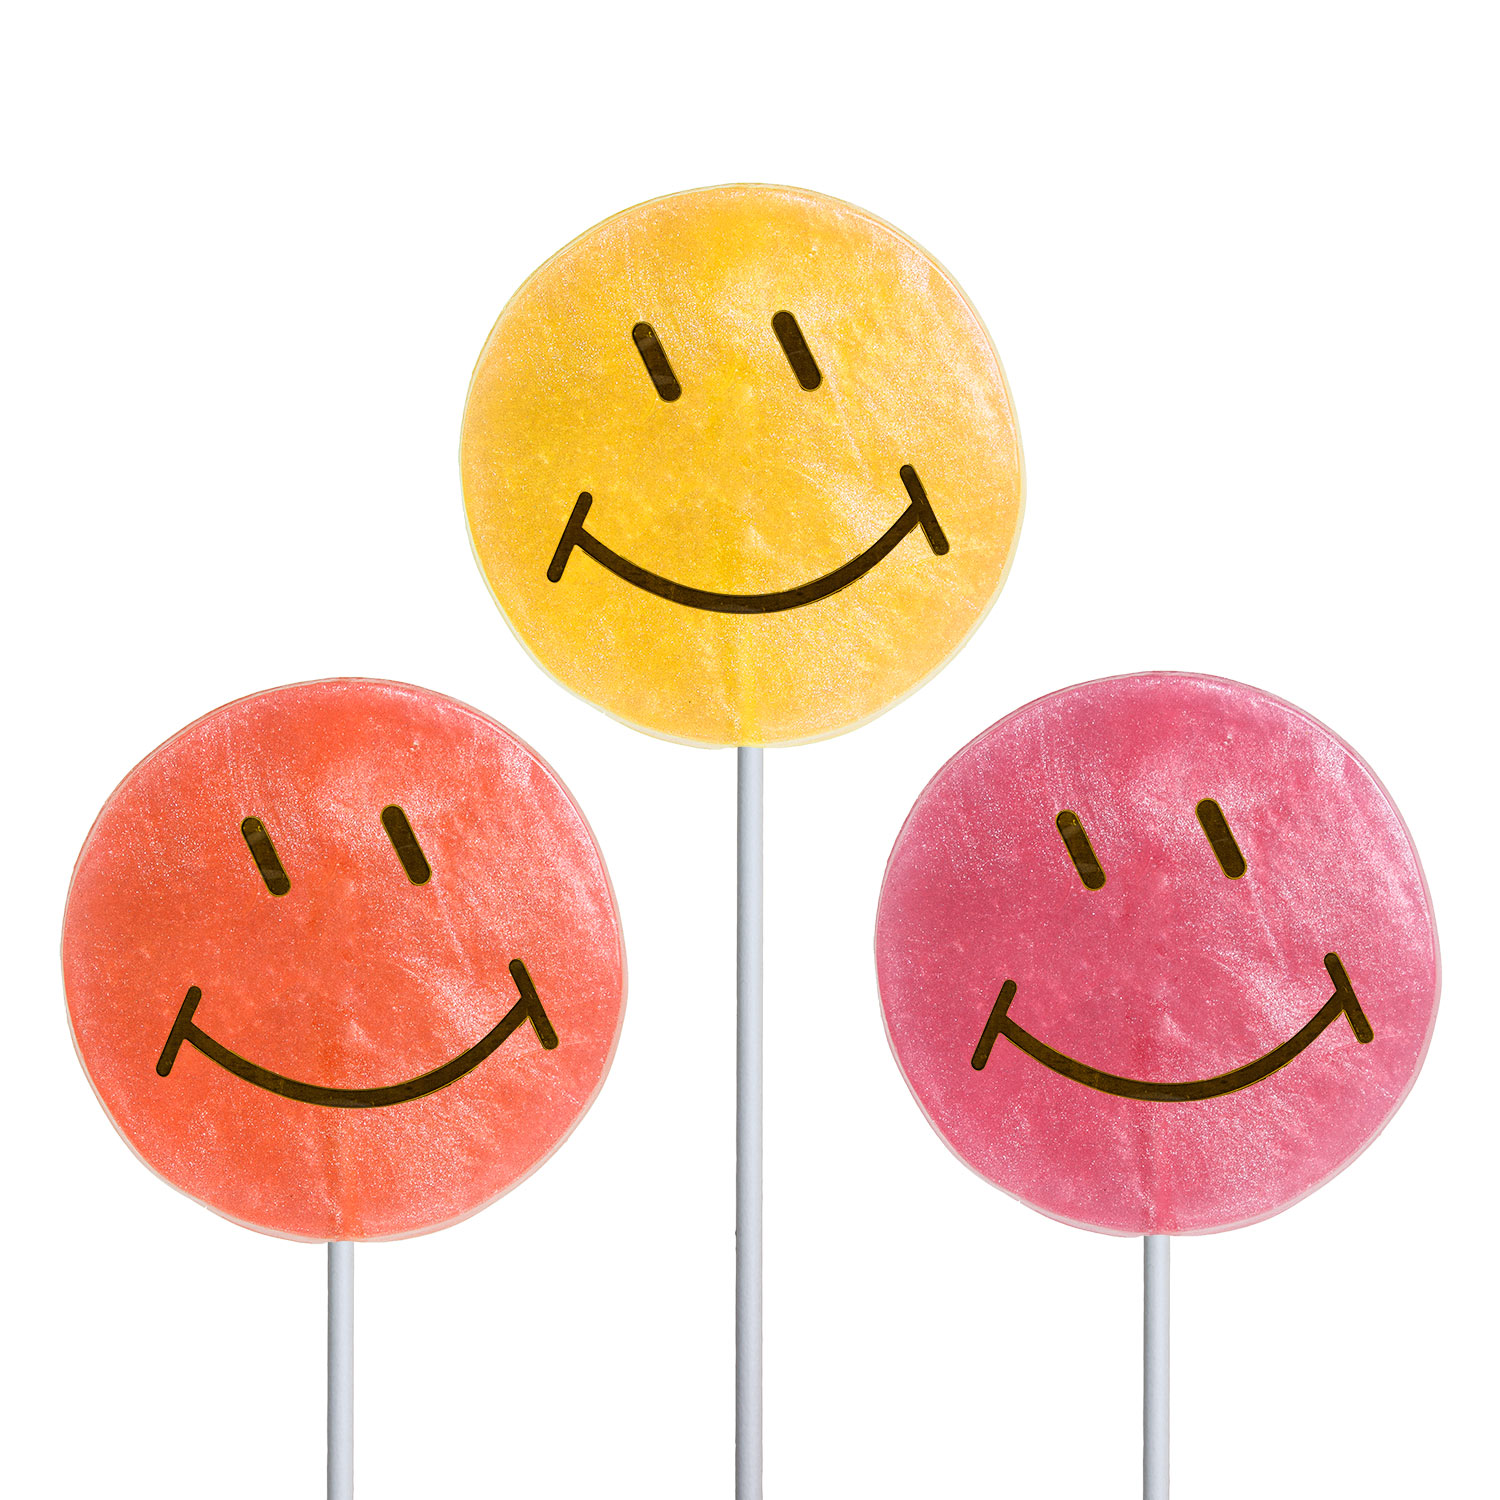 Smiley Face Lollipops: 24 Hard candy lollipops shaped like smiley ...